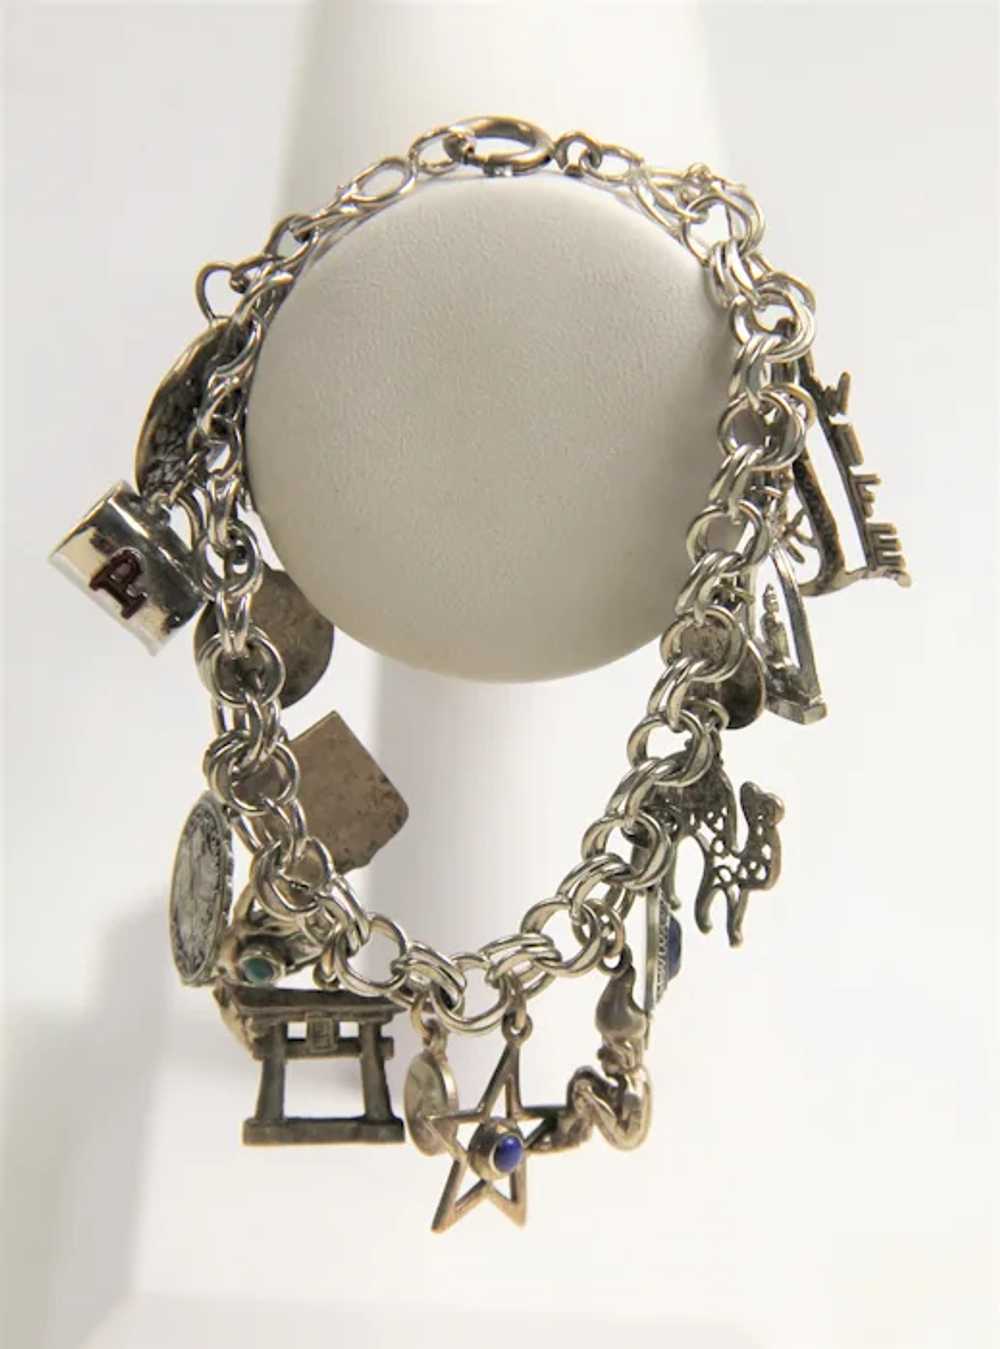 Vintage Sterling Charm Bracelet With Travel Theme - image 2